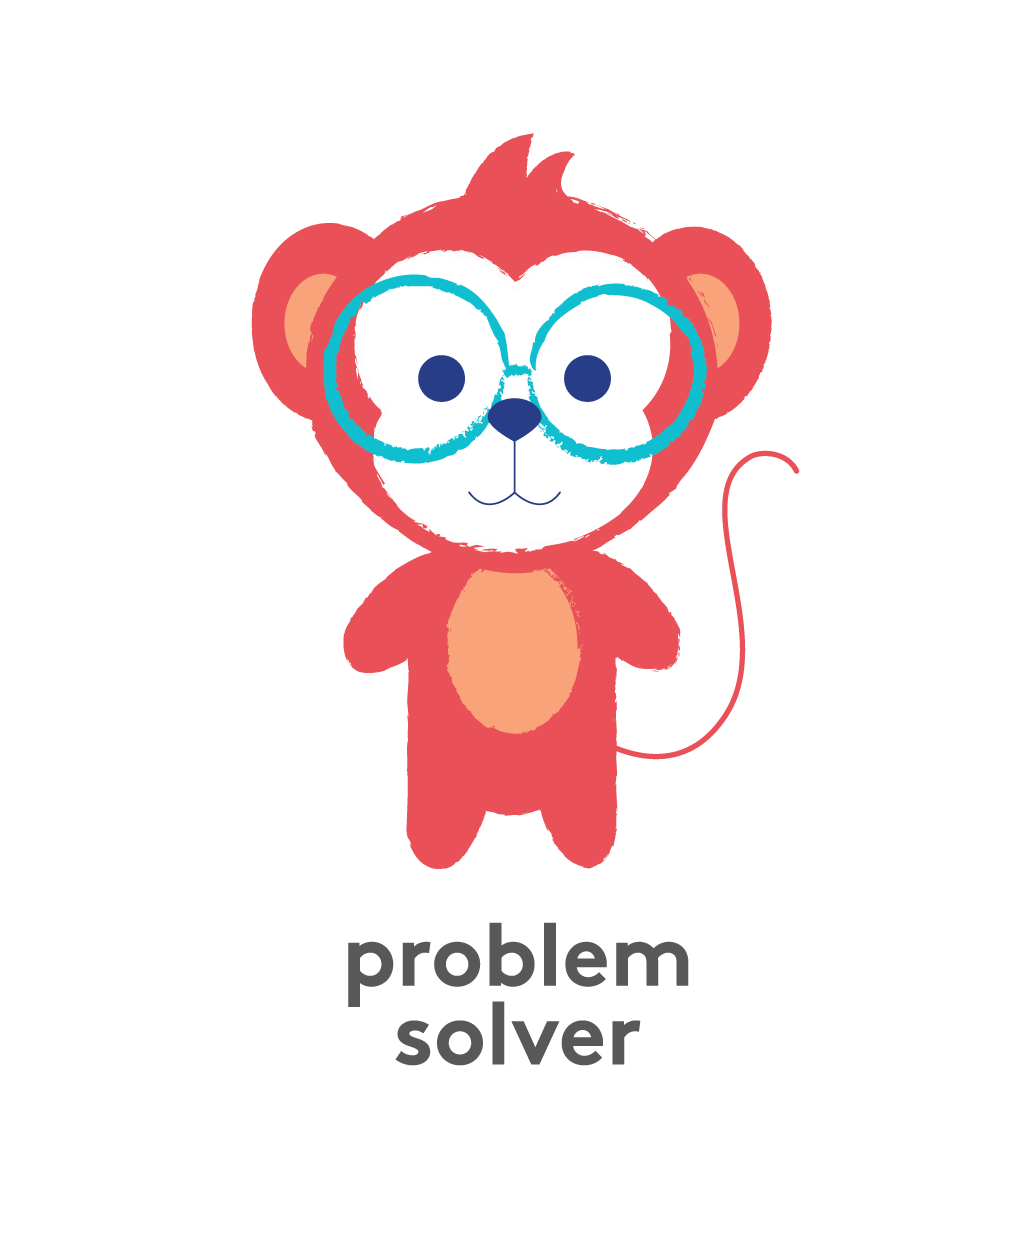 Chimp: Problem Solver